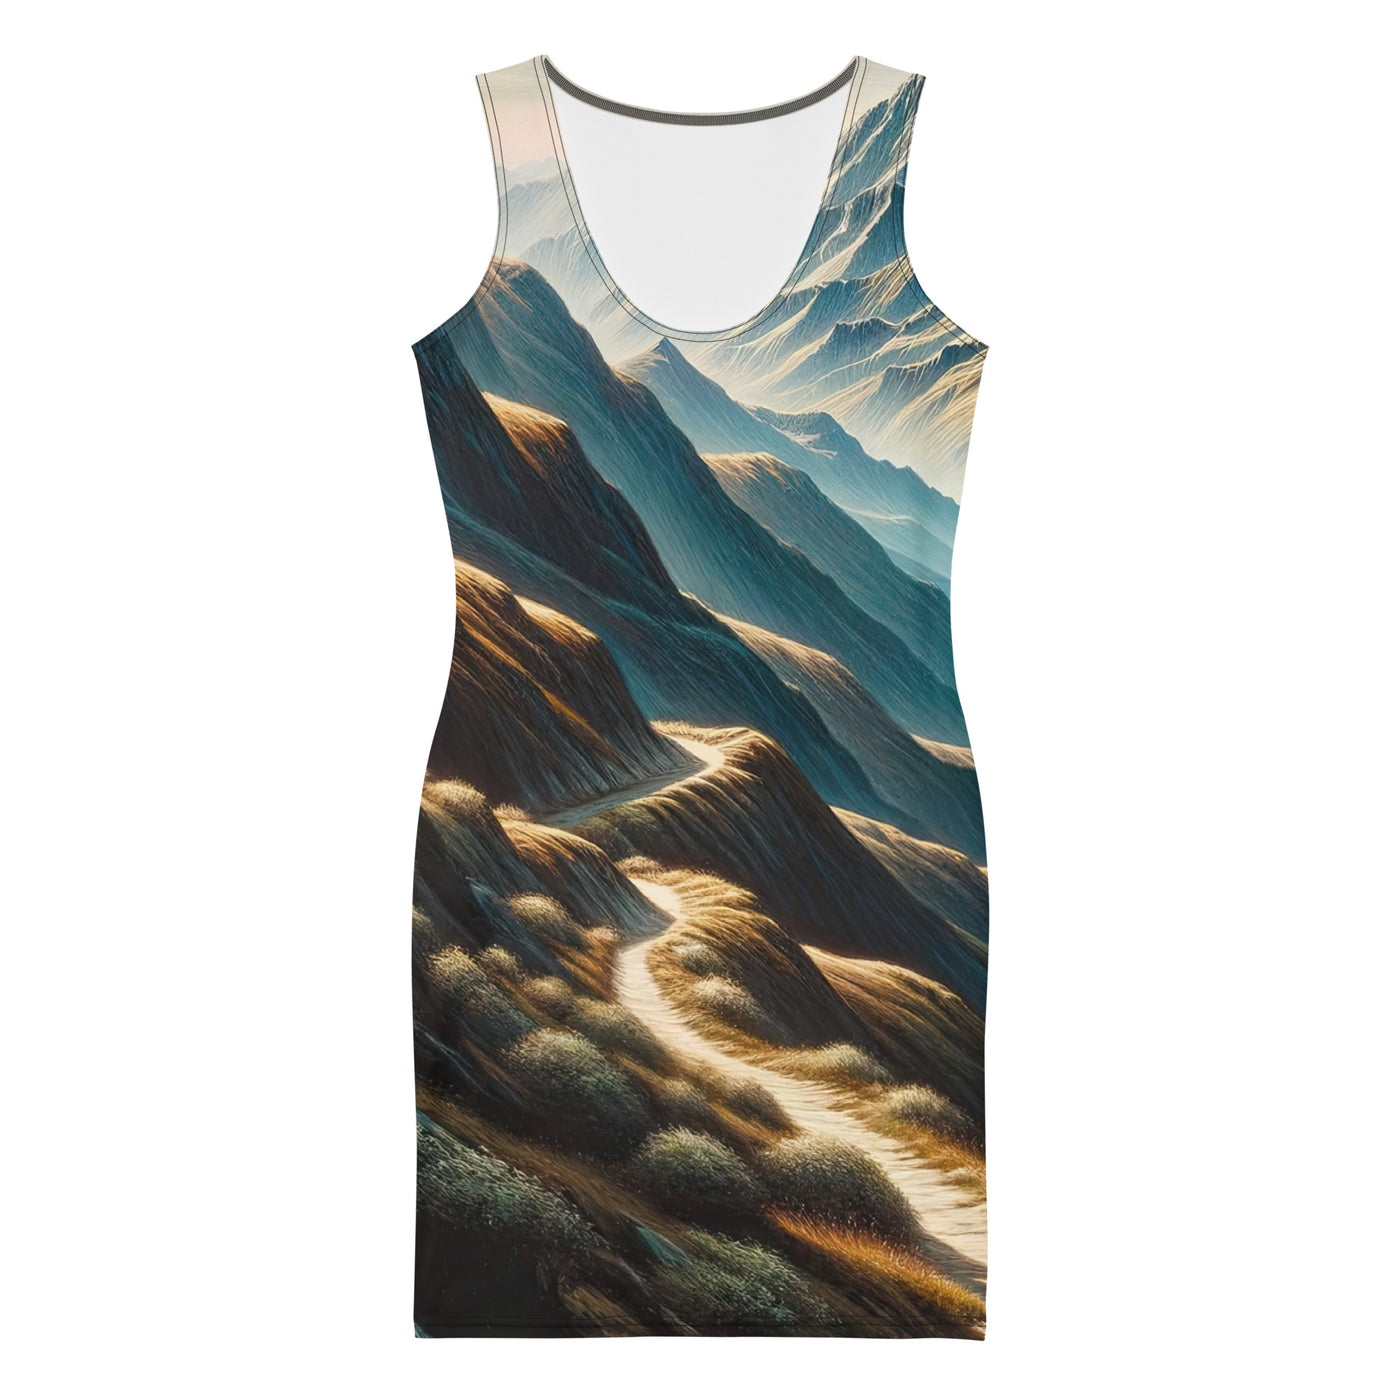 Berglandschaft: Acrylgemälde mit hervorgehobenem Pfad - Langes Damen Kleid (All-Over Print) berge xxx yyy zzz